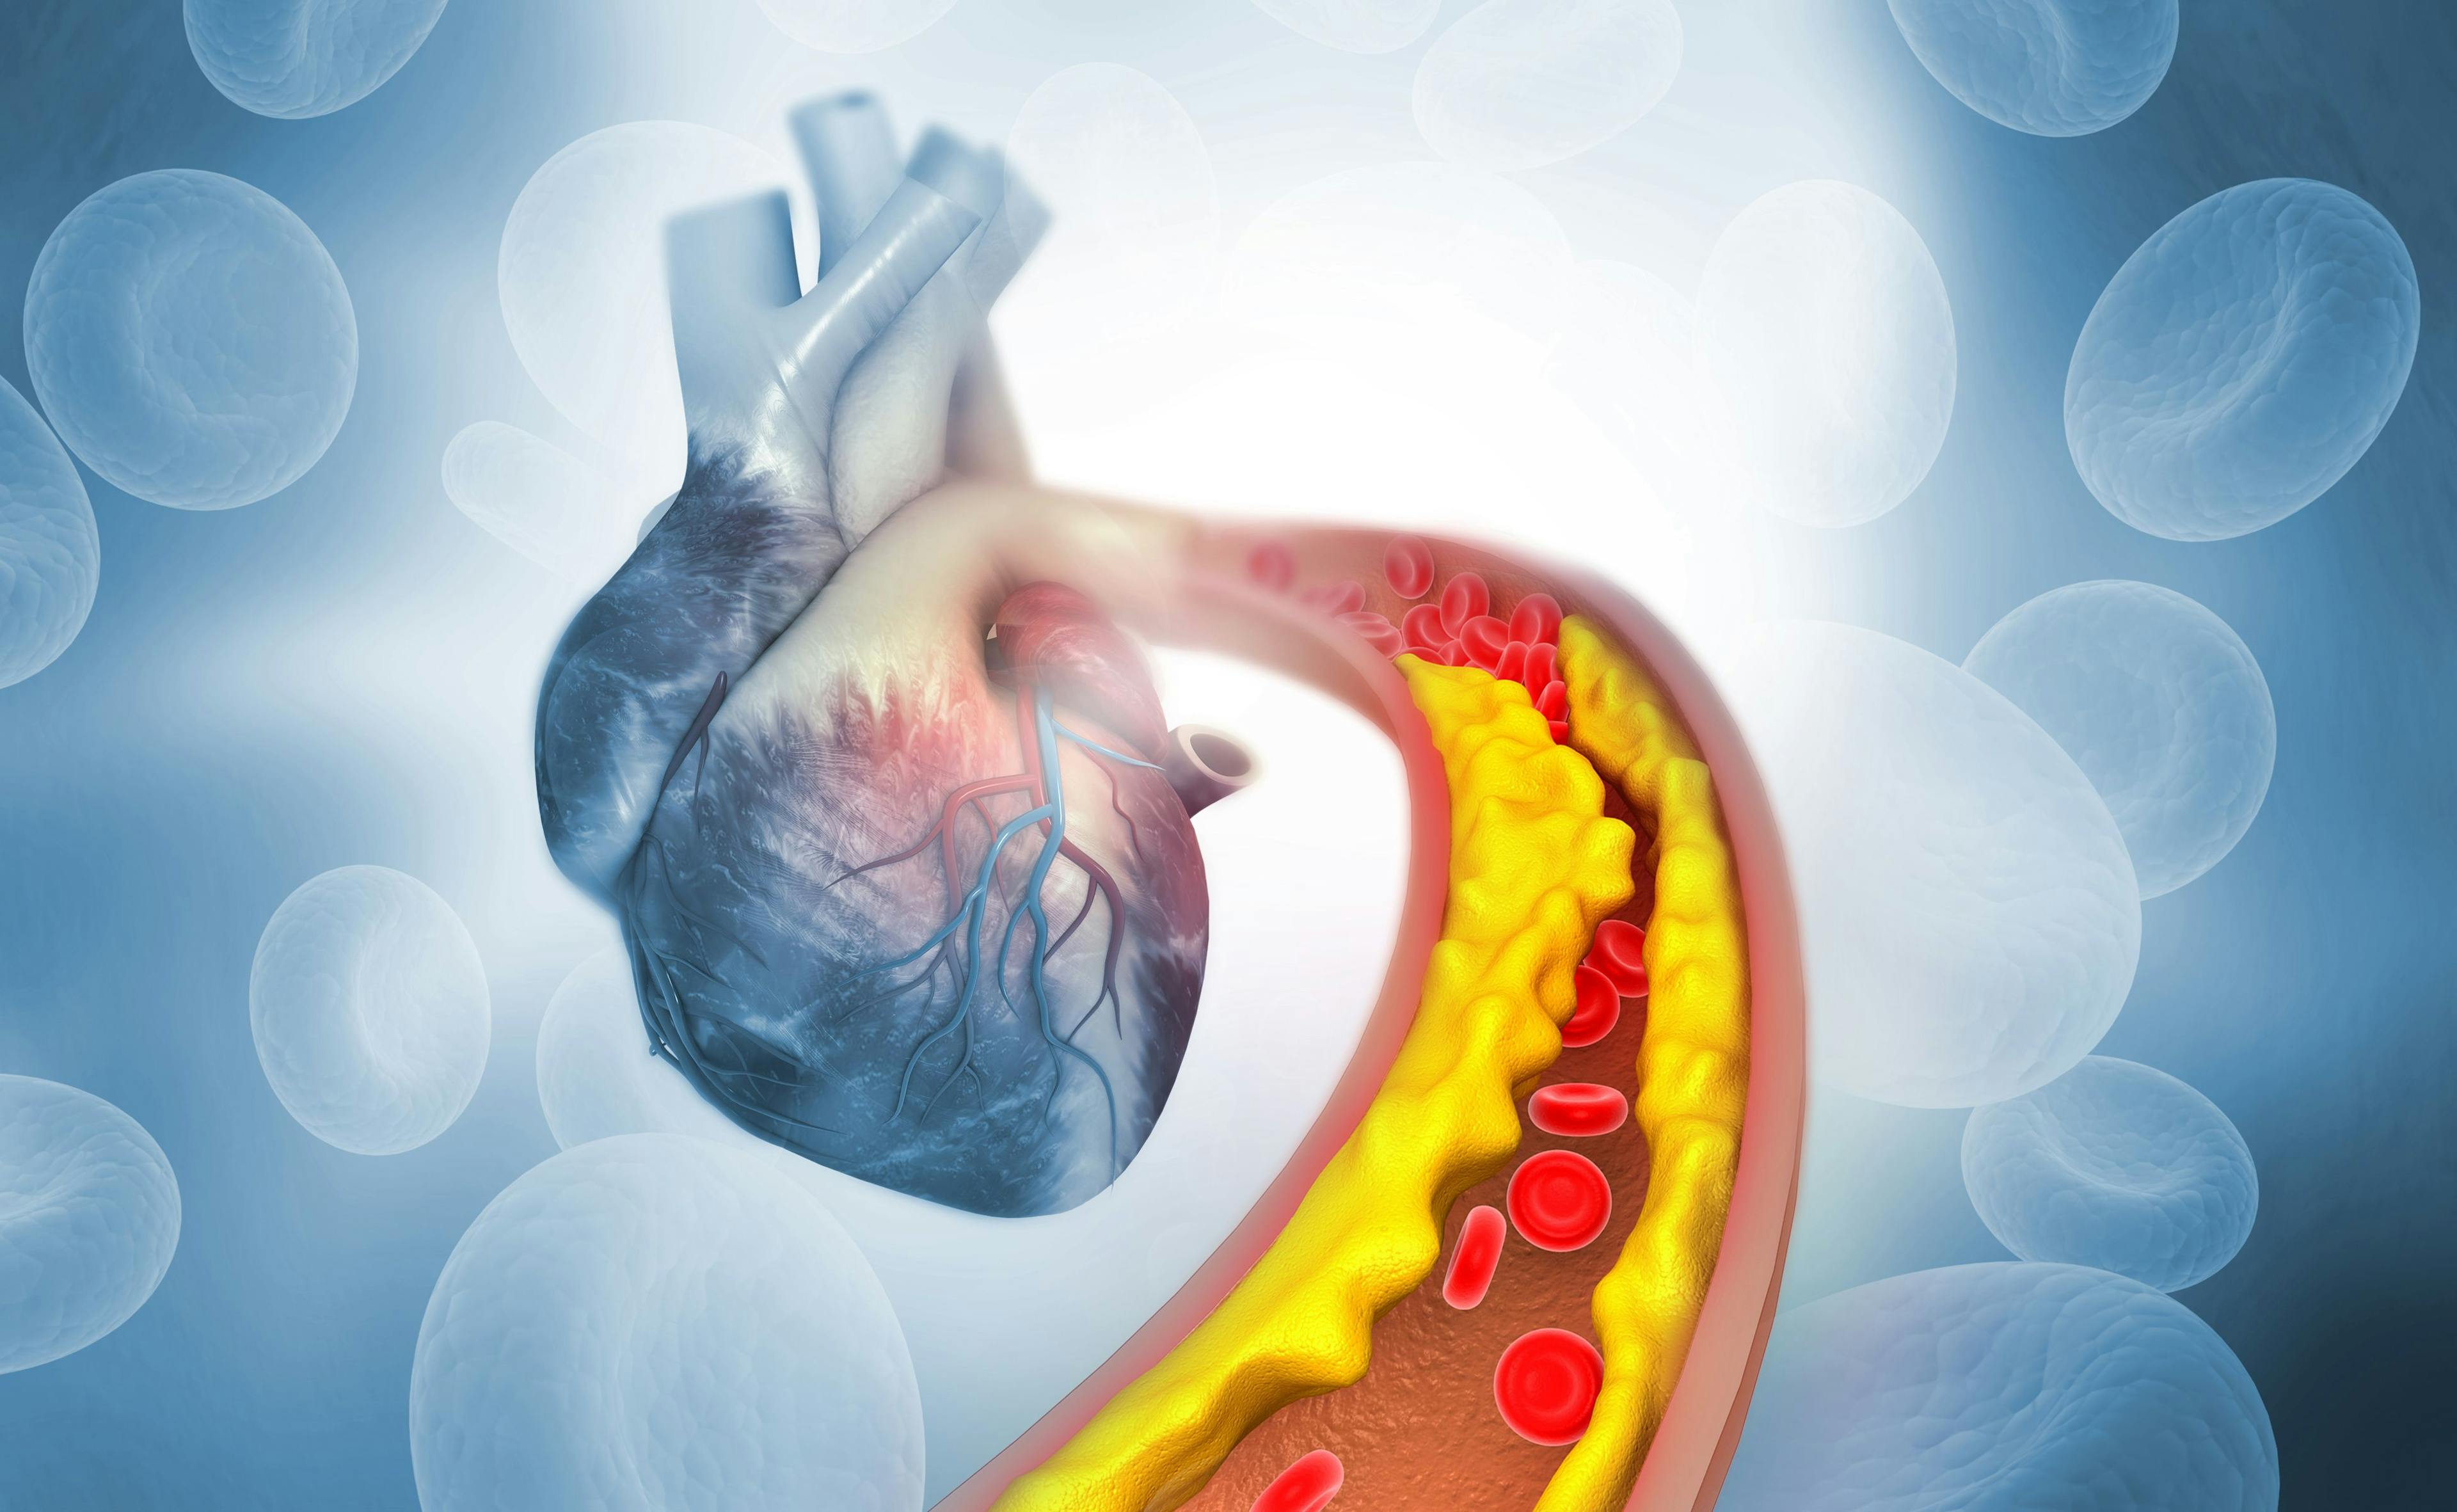 Cholesterol plaque in artery with Human heart anatomy | Image Credit: Rasi - stock.adobe.com